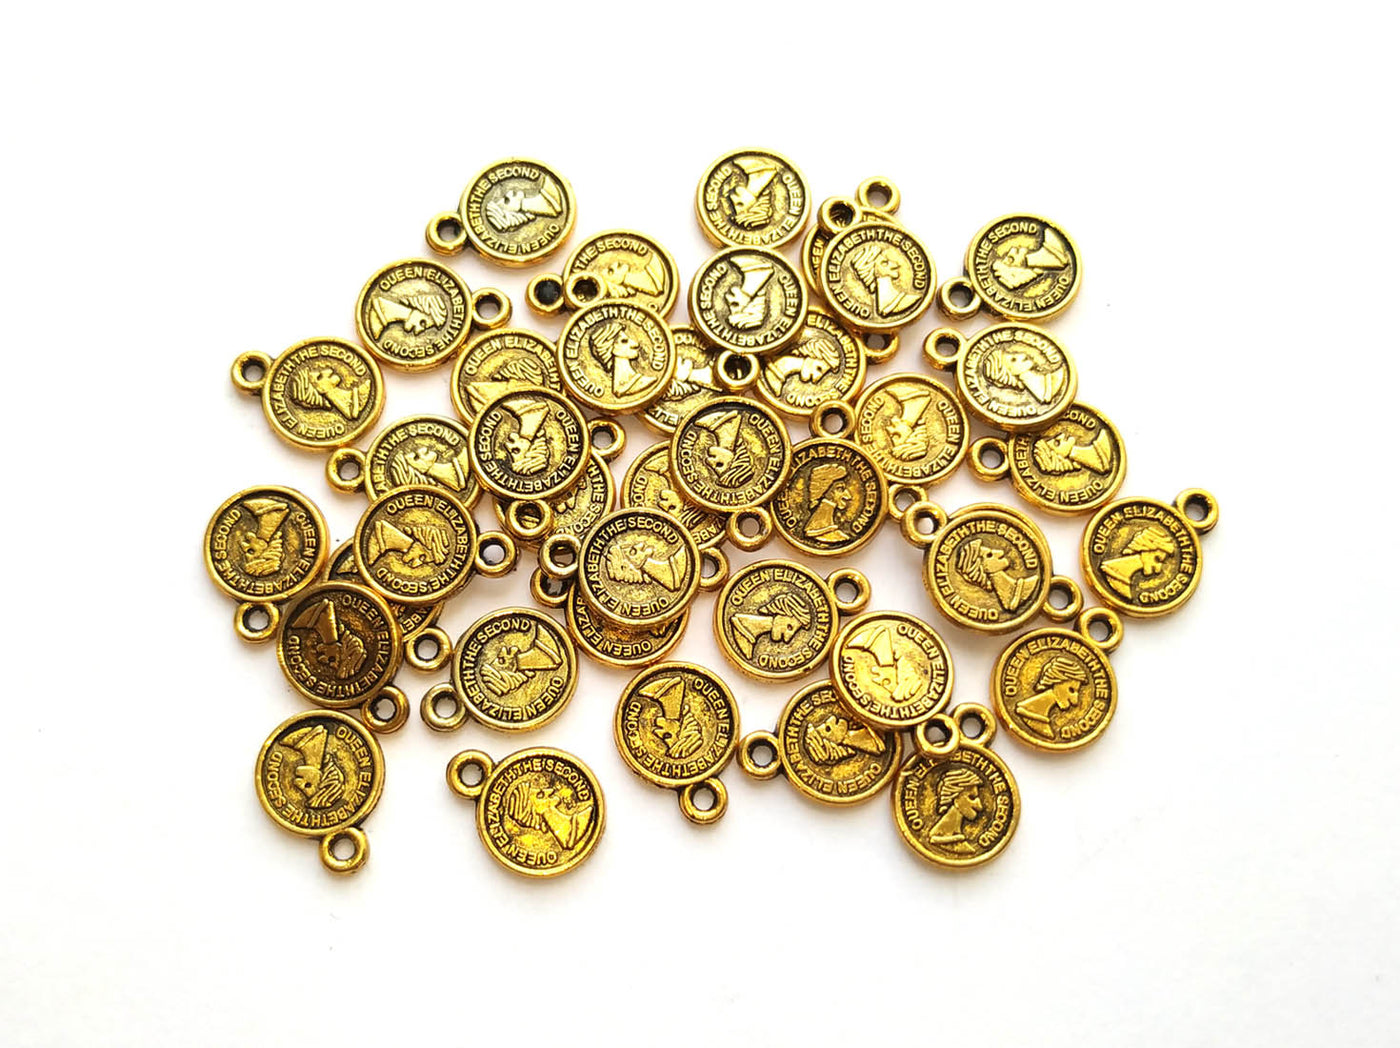 Antique Golden Coin Charms